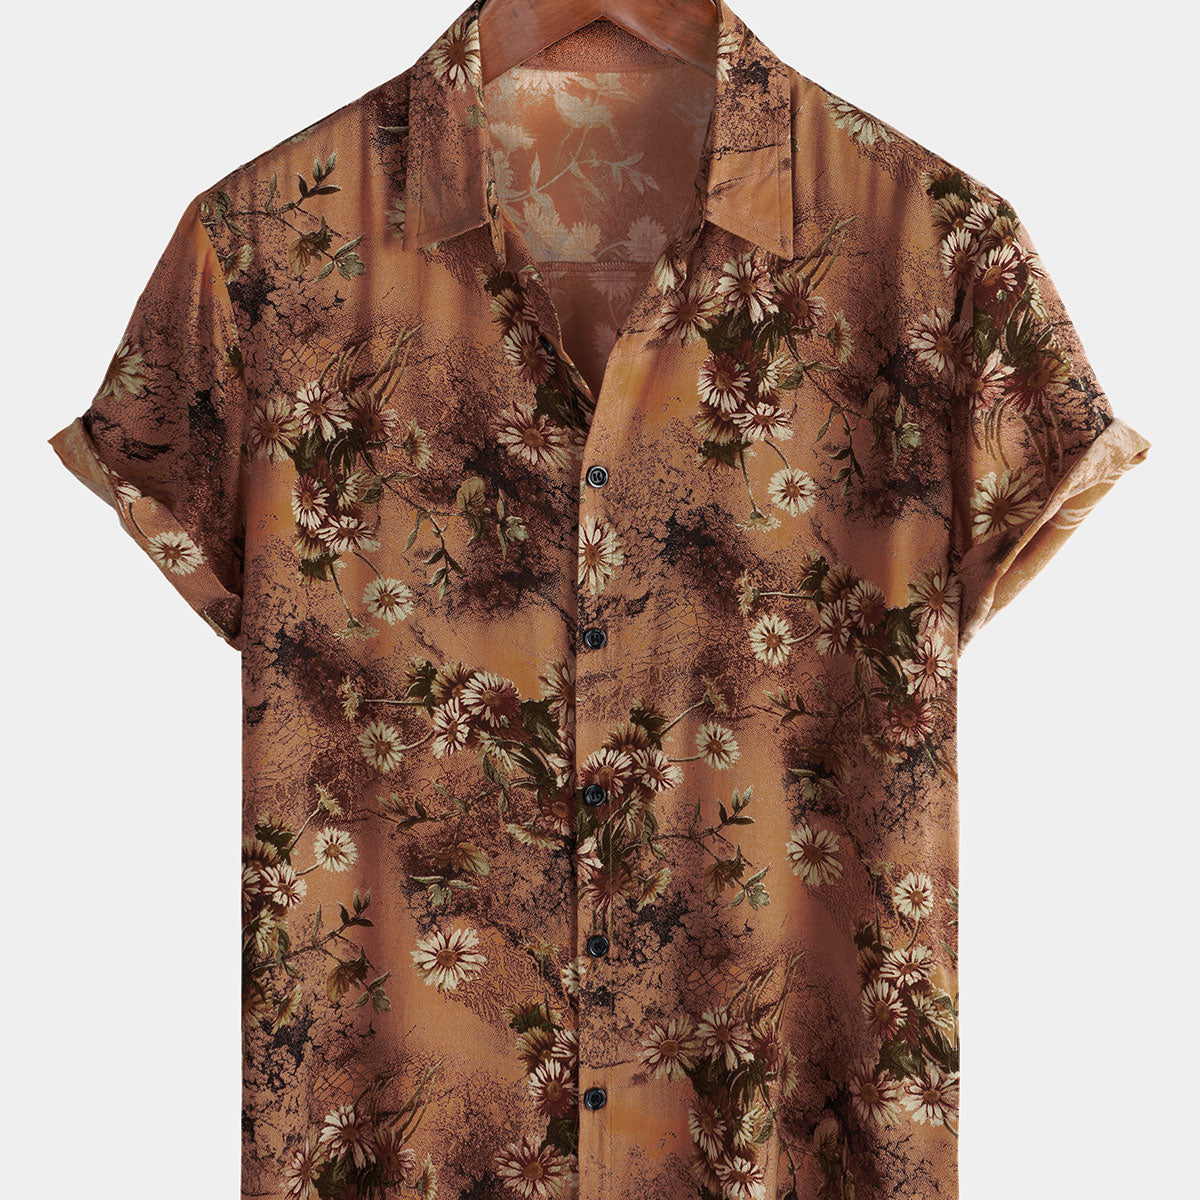 Men's Retro Floral Brown Summer Holiday Short Sleeve Shirt